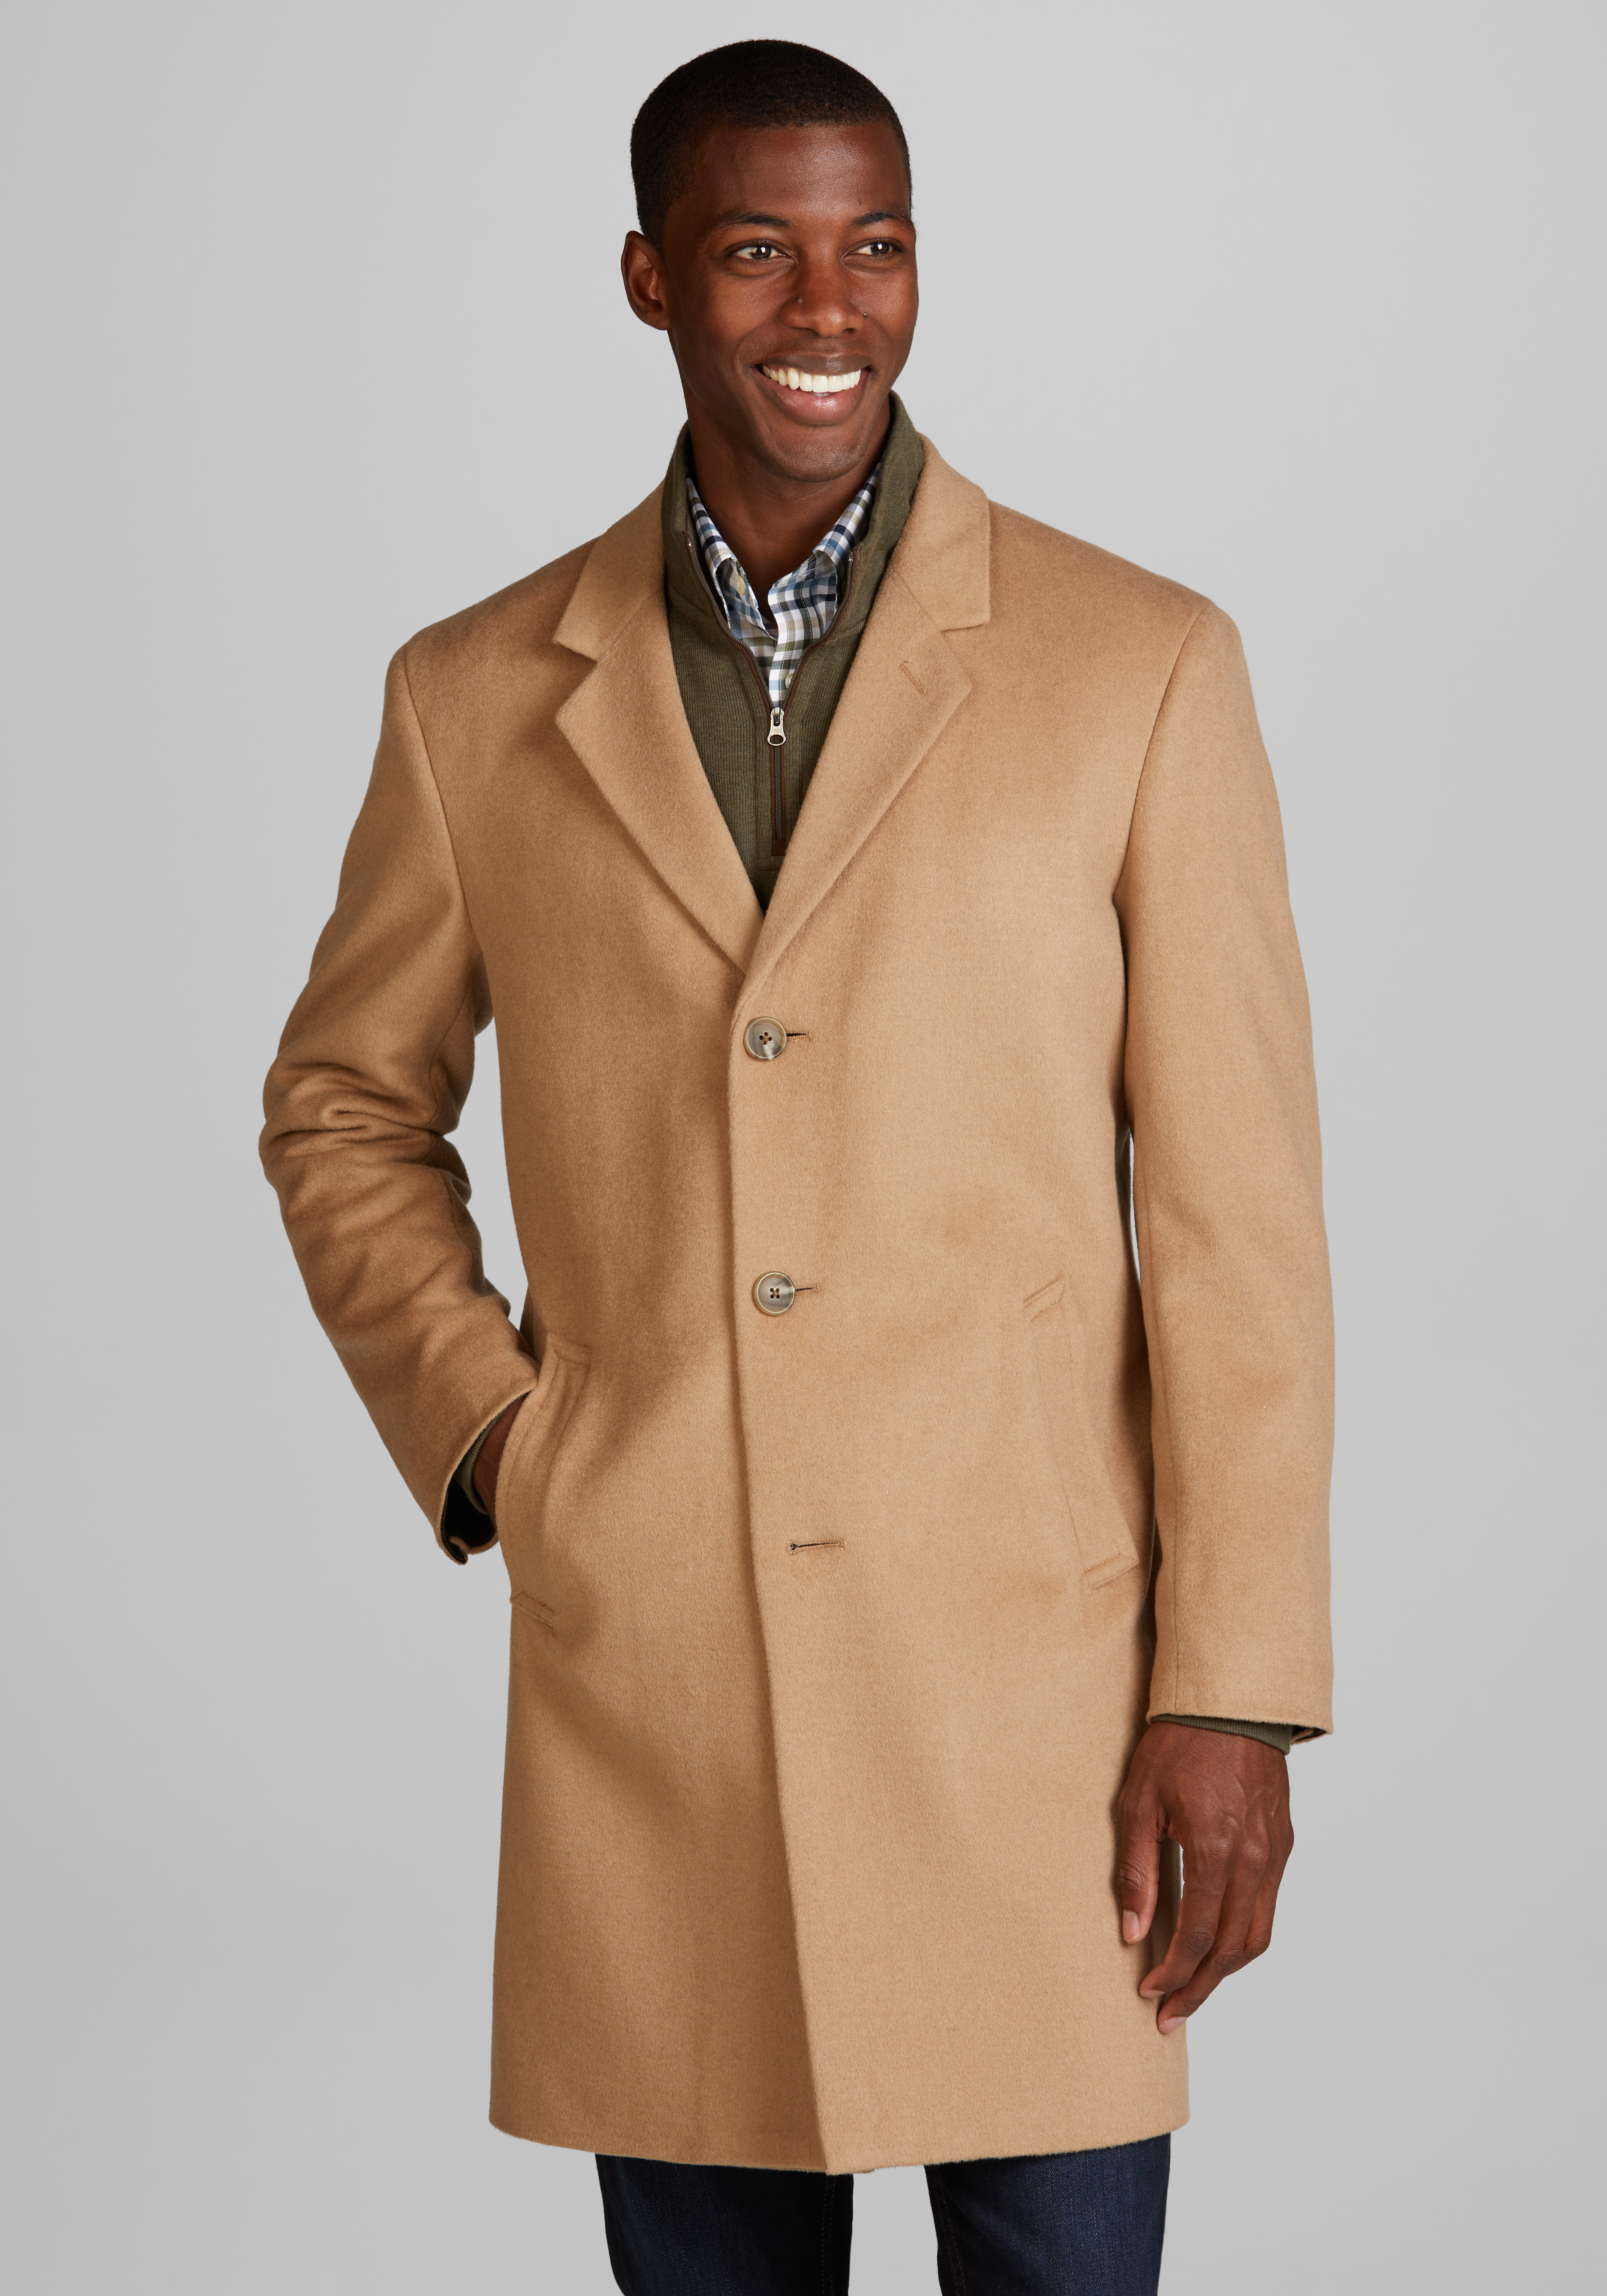 Men's Overcoats & Topcoats | Men's Outerwear | JoS. A. Bank Clothiers